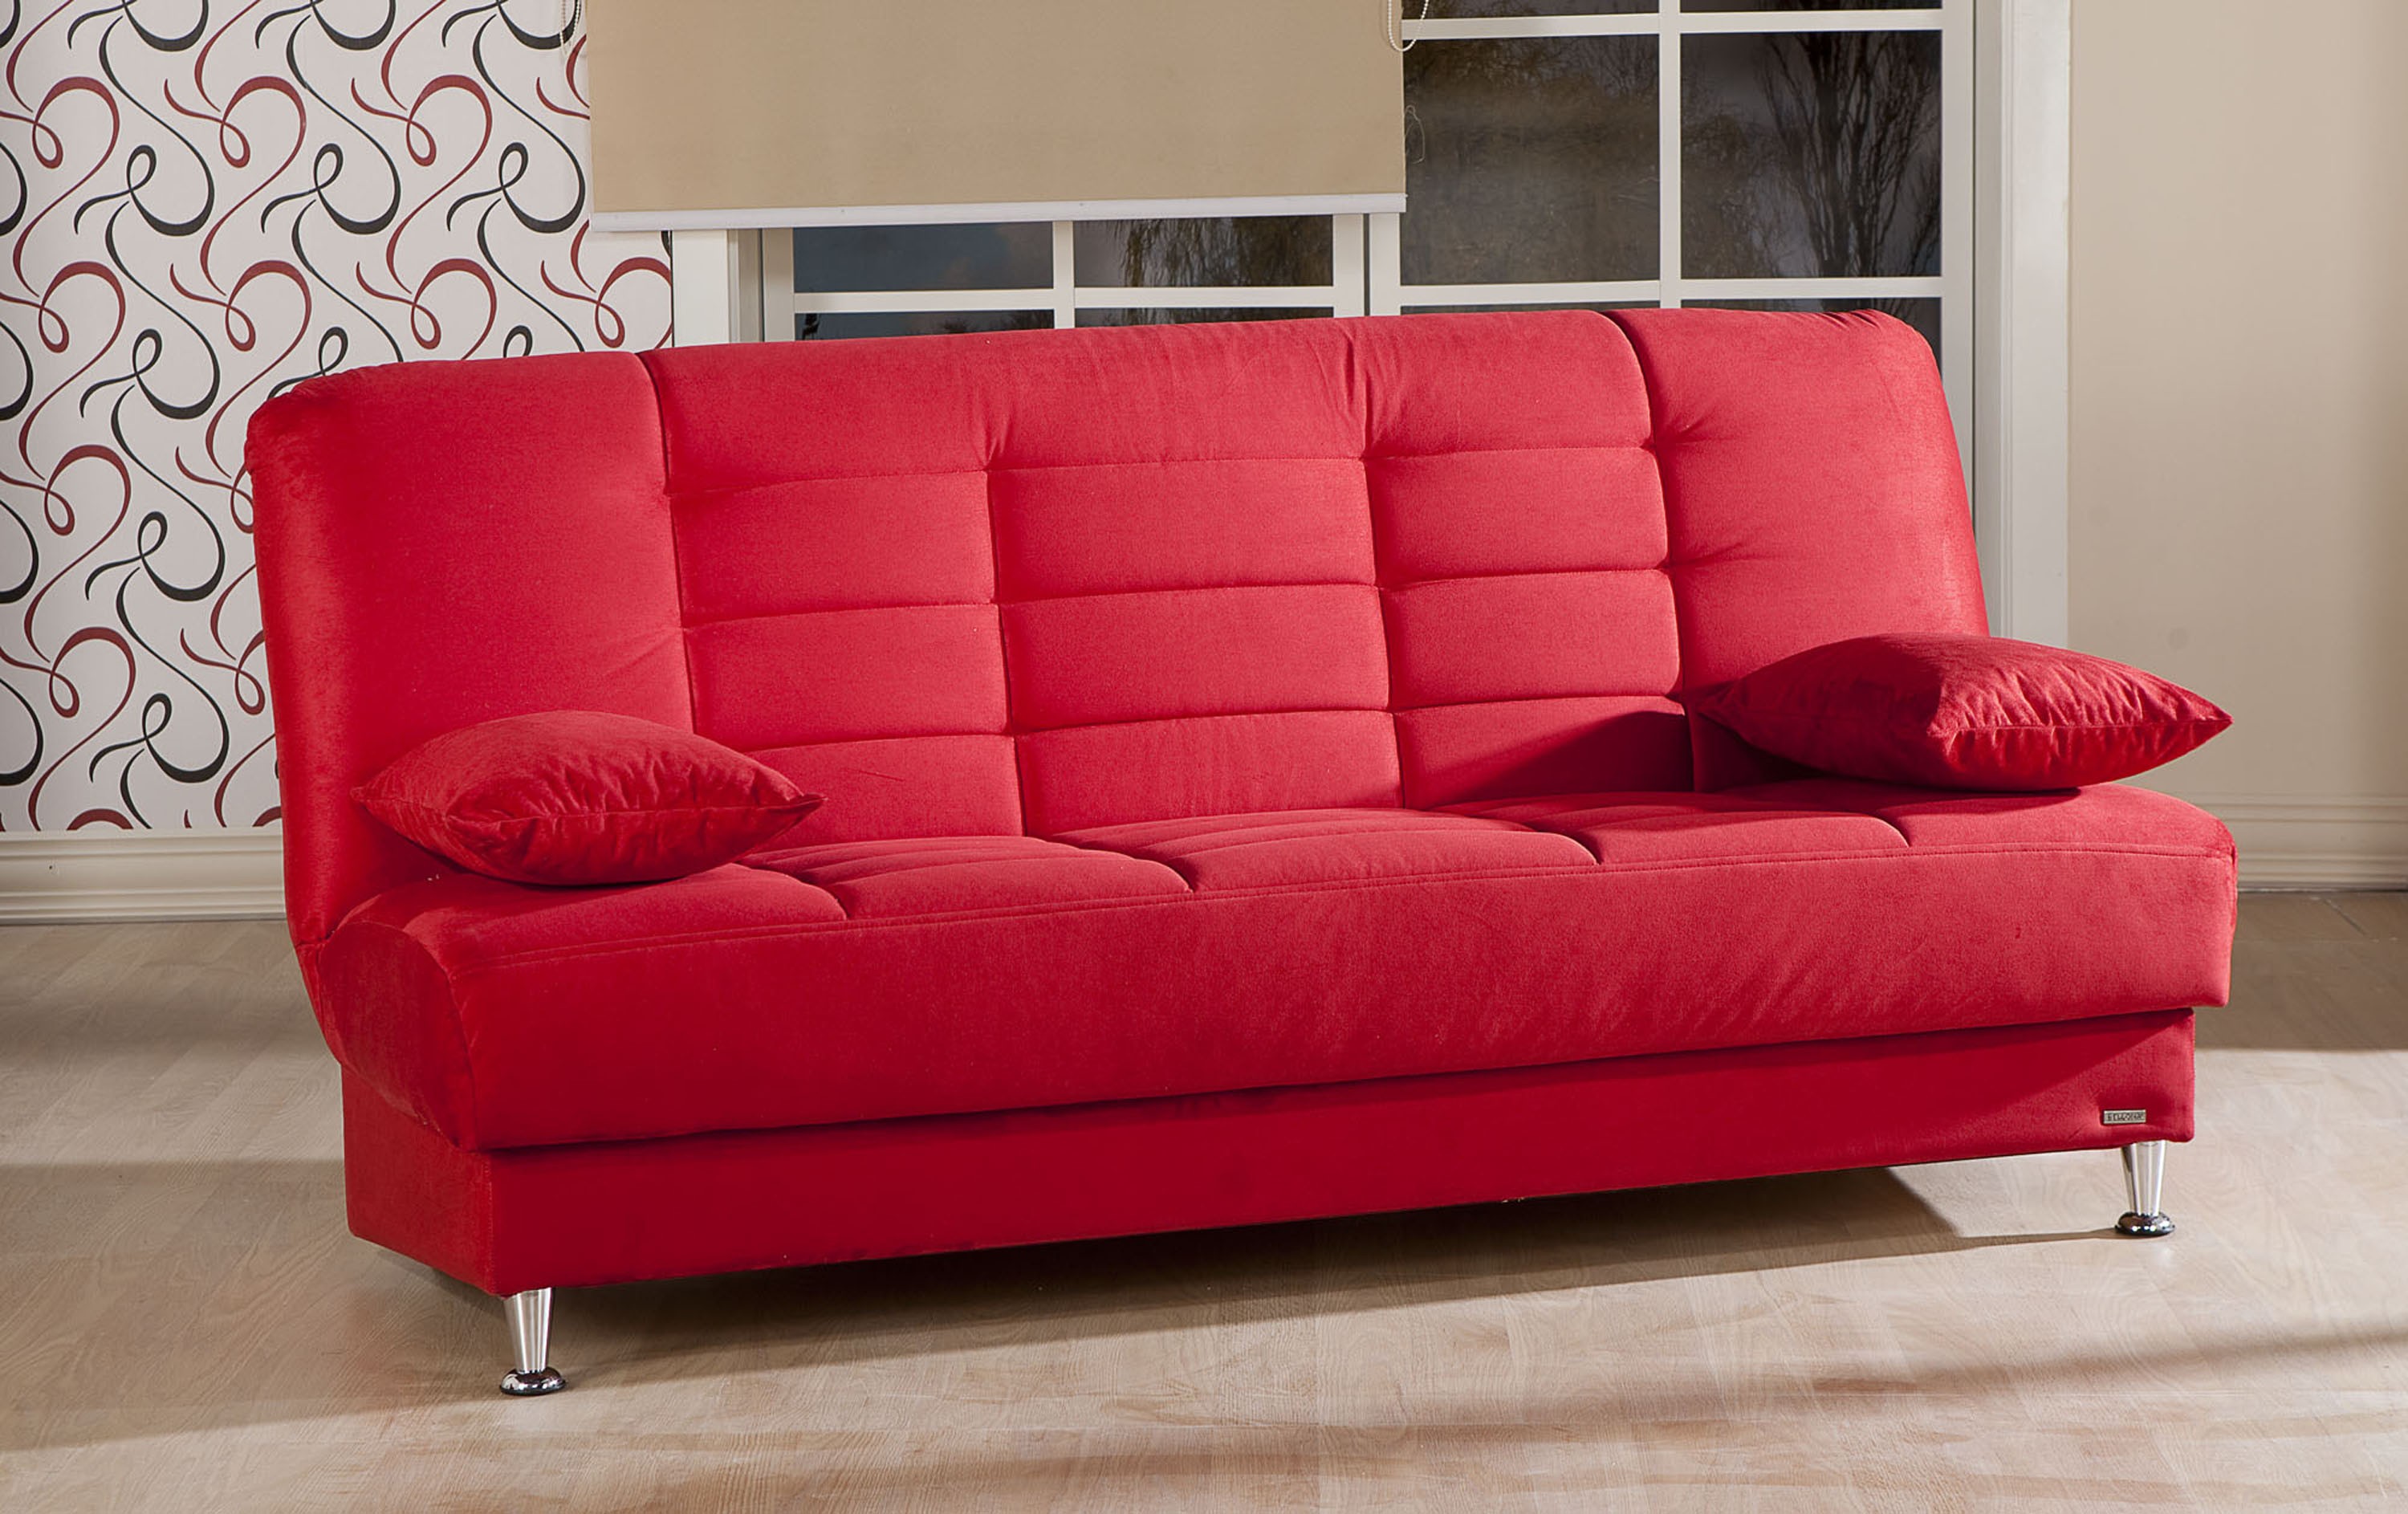 The Nuiances of Comfortable Modern Sofa